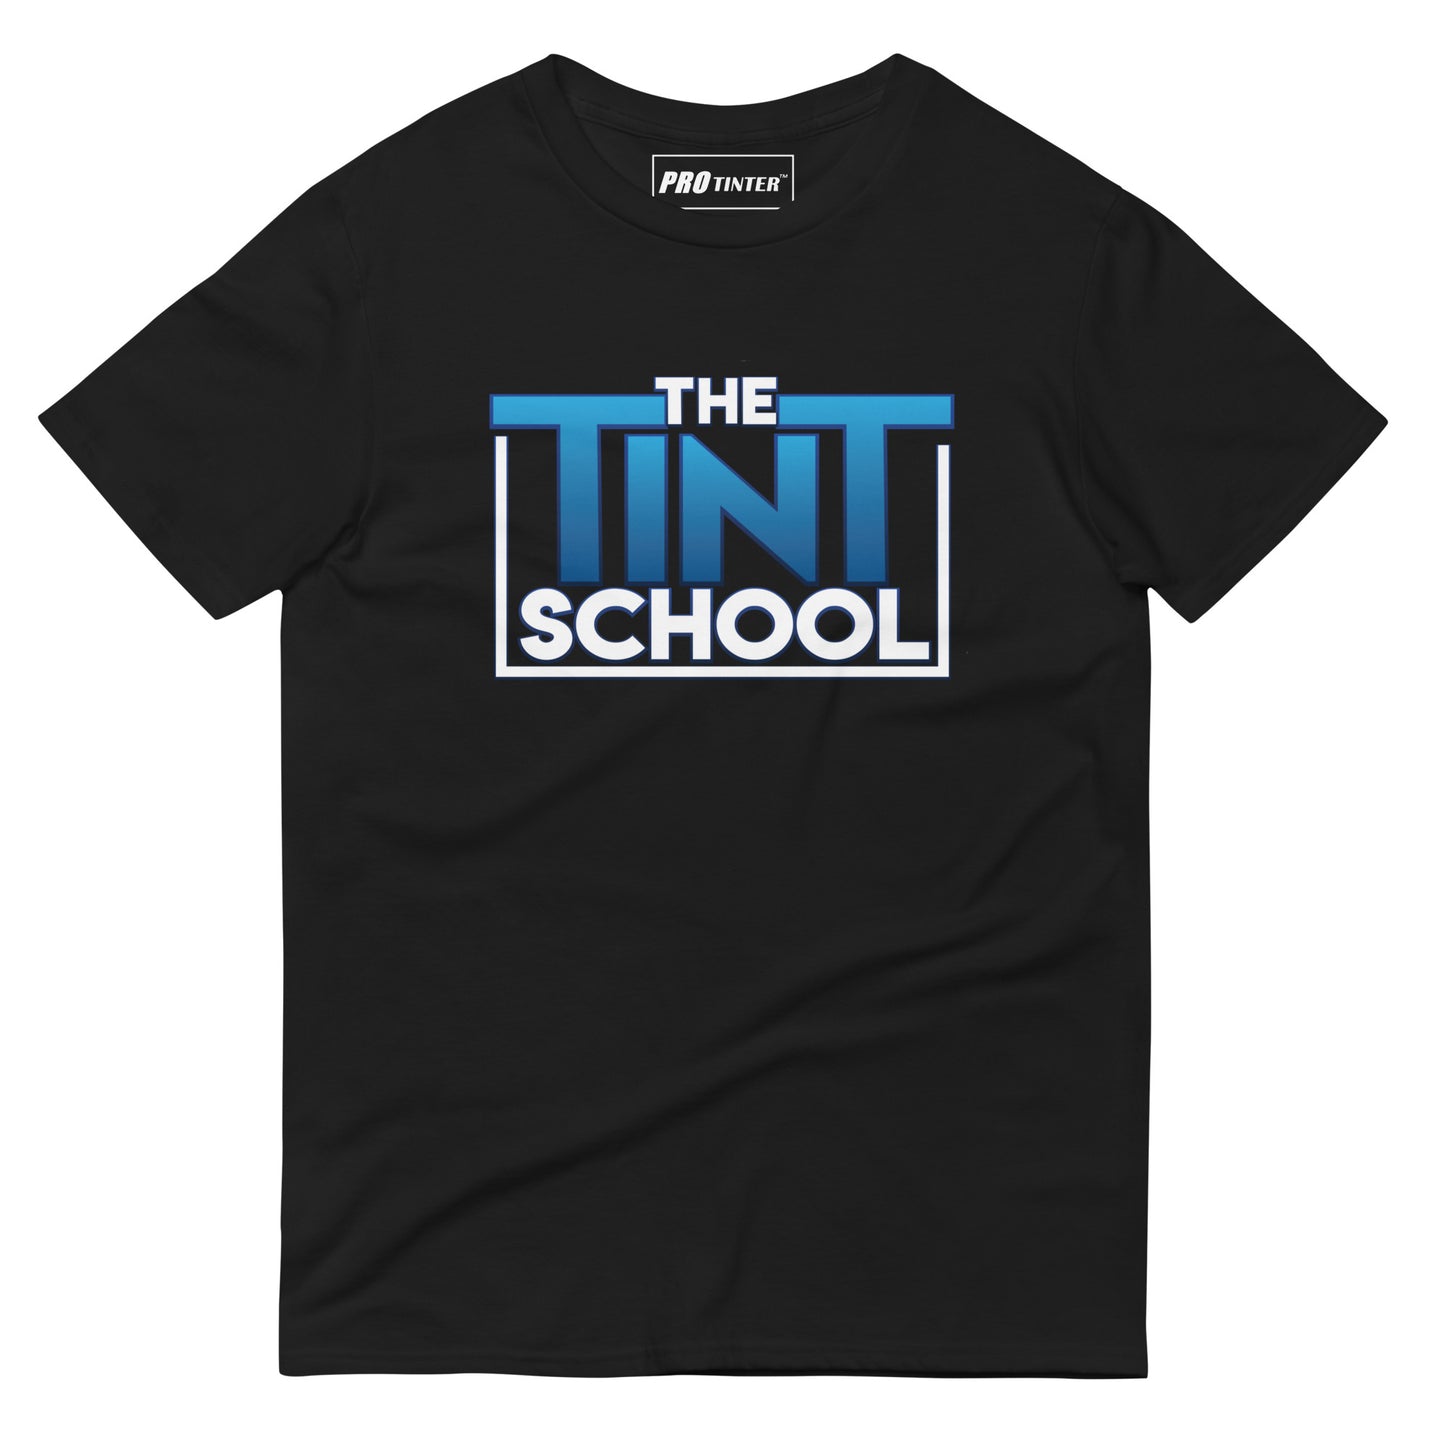 The Tint School Short-Sleeve T-Shirt